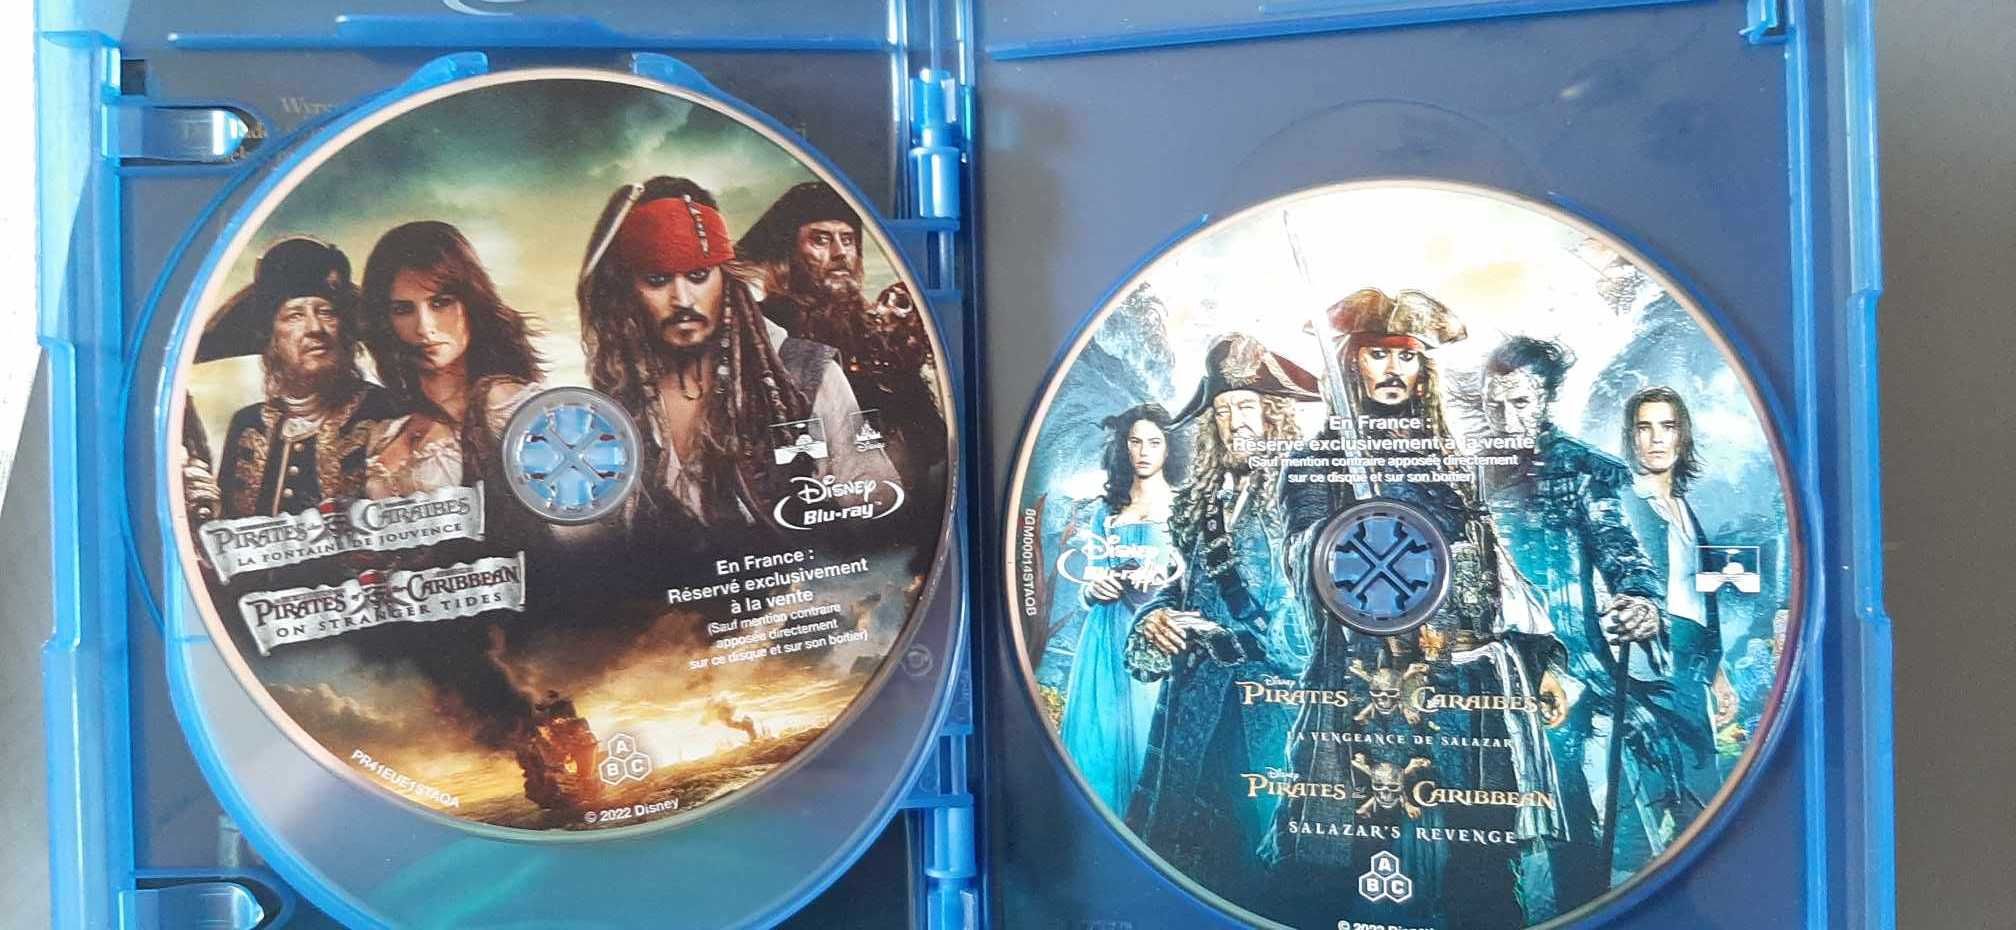 Piraci z Karaibów Pirates 1-5 set Blu Ray w.ENG